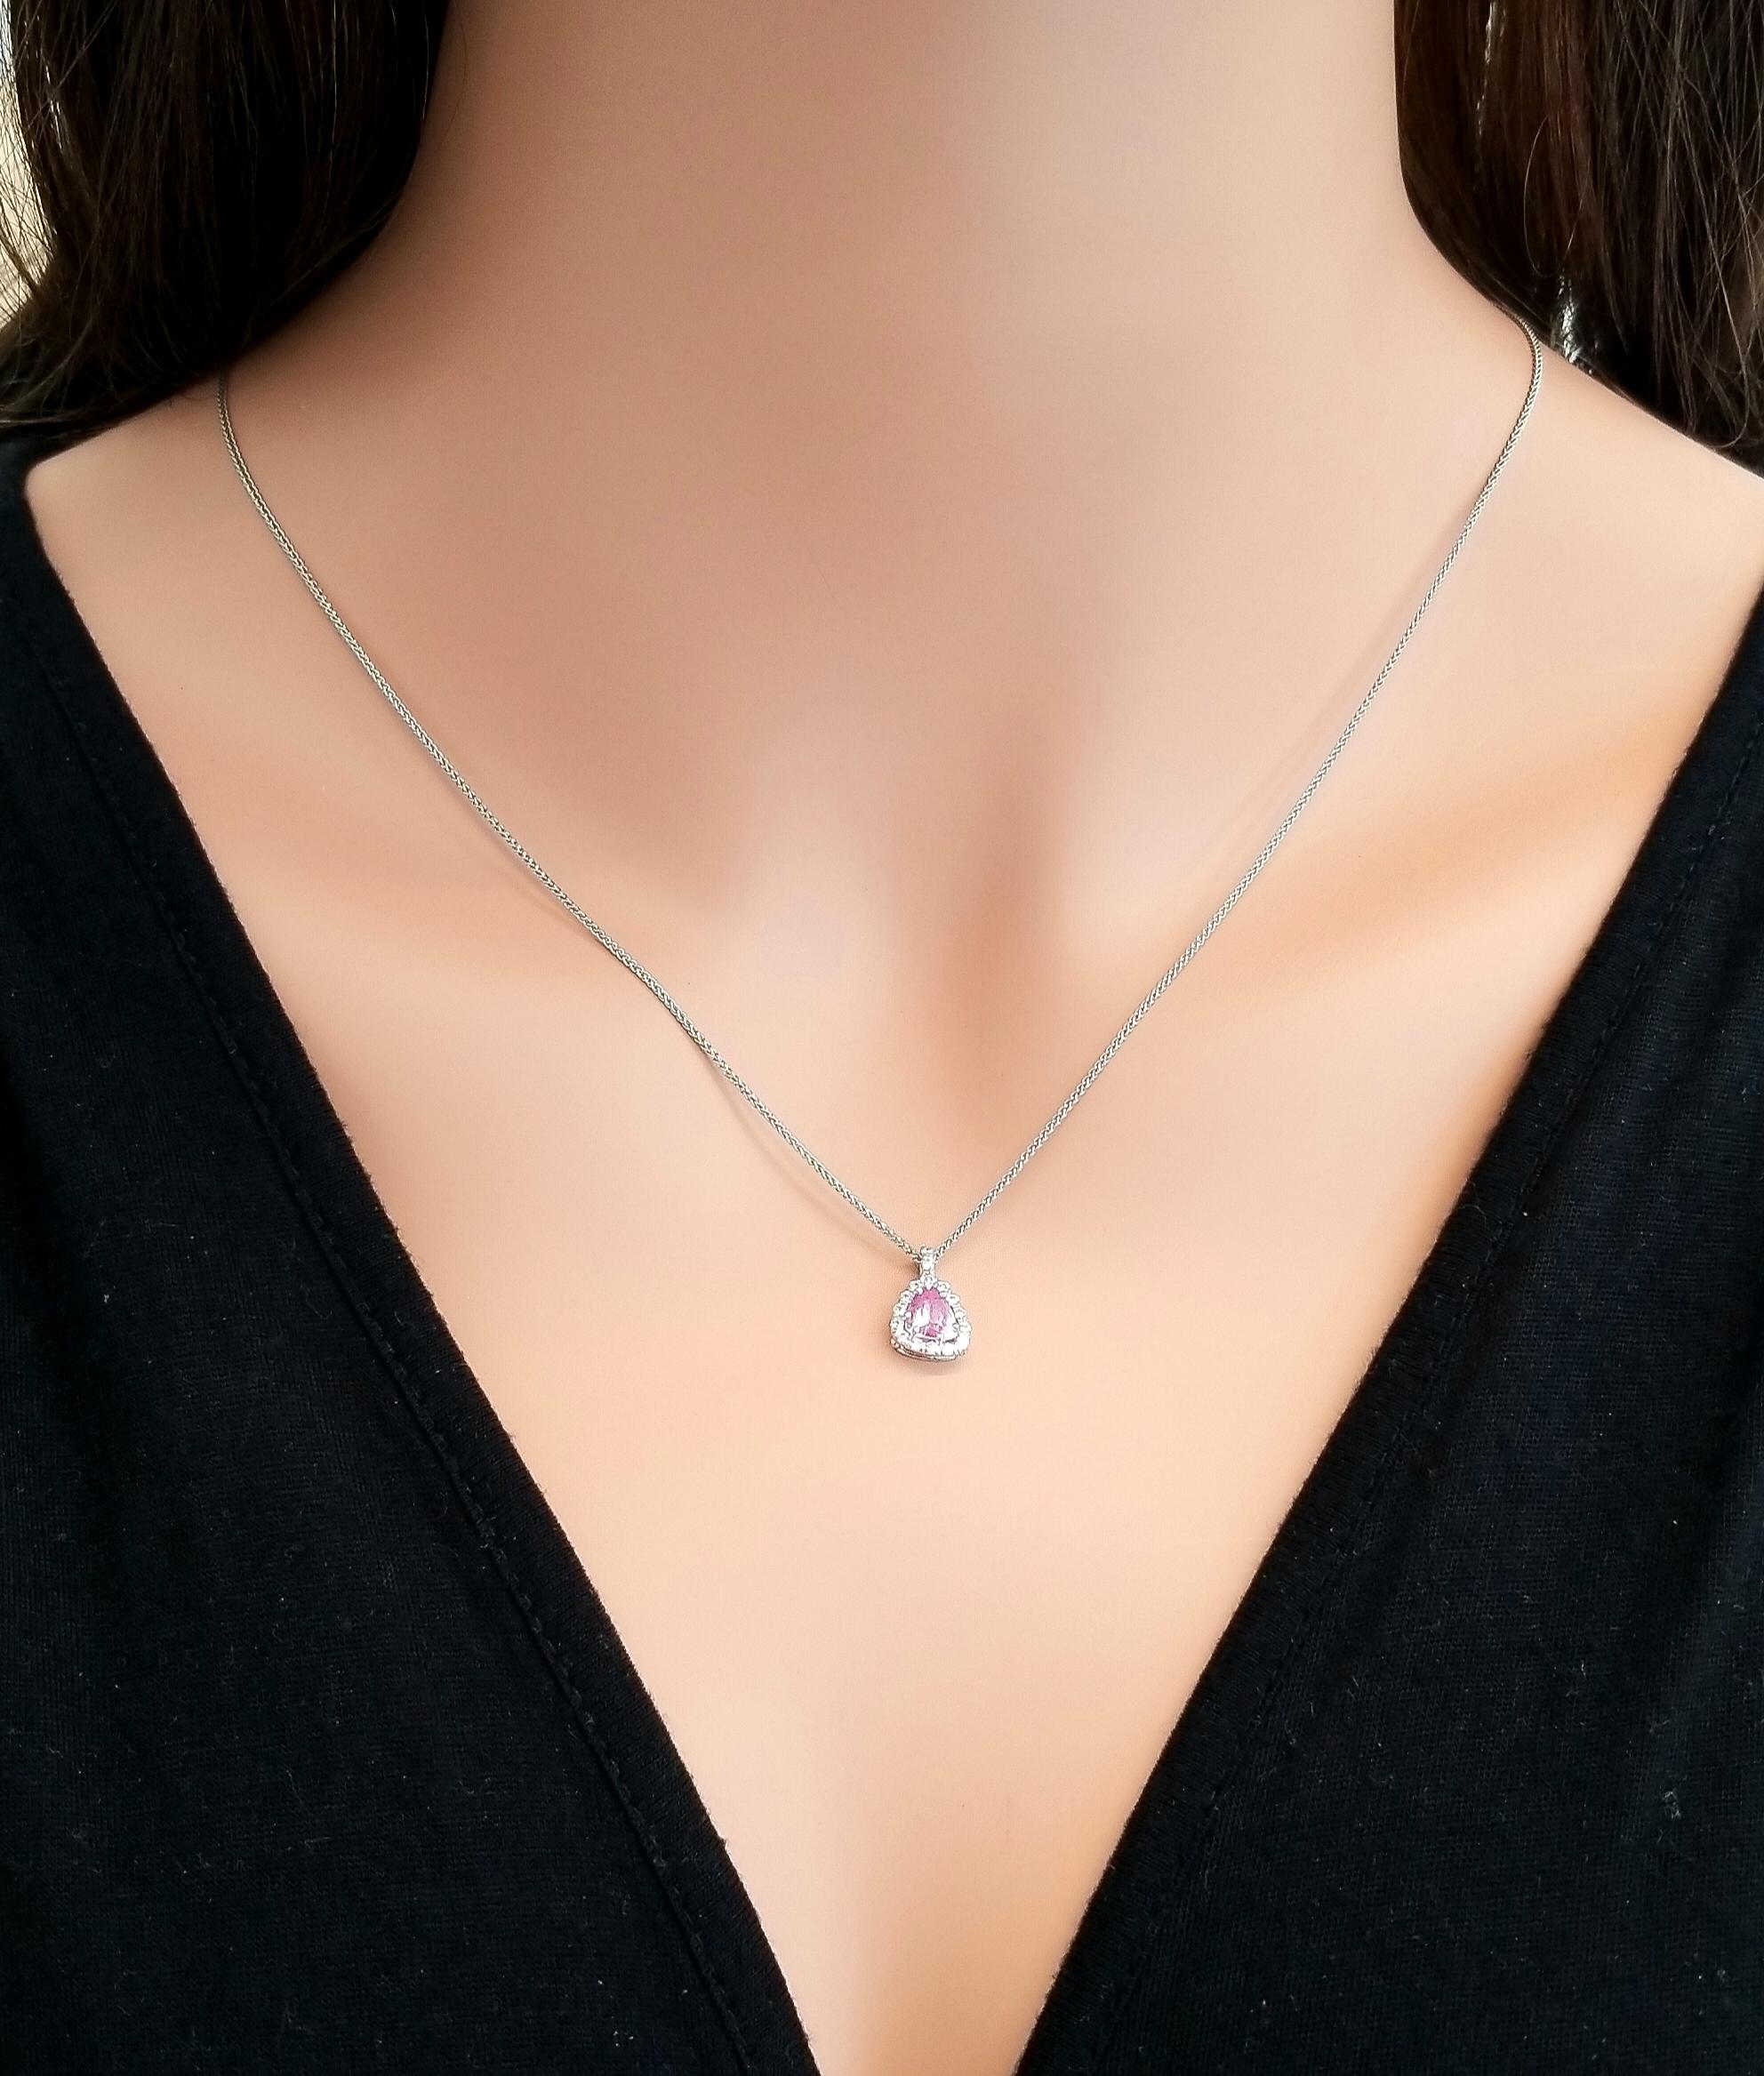 Trillion Cut 0.77 Carat Trillion Pink Sapphire and Diamond Pendant Necklace in 18 Karat Gold